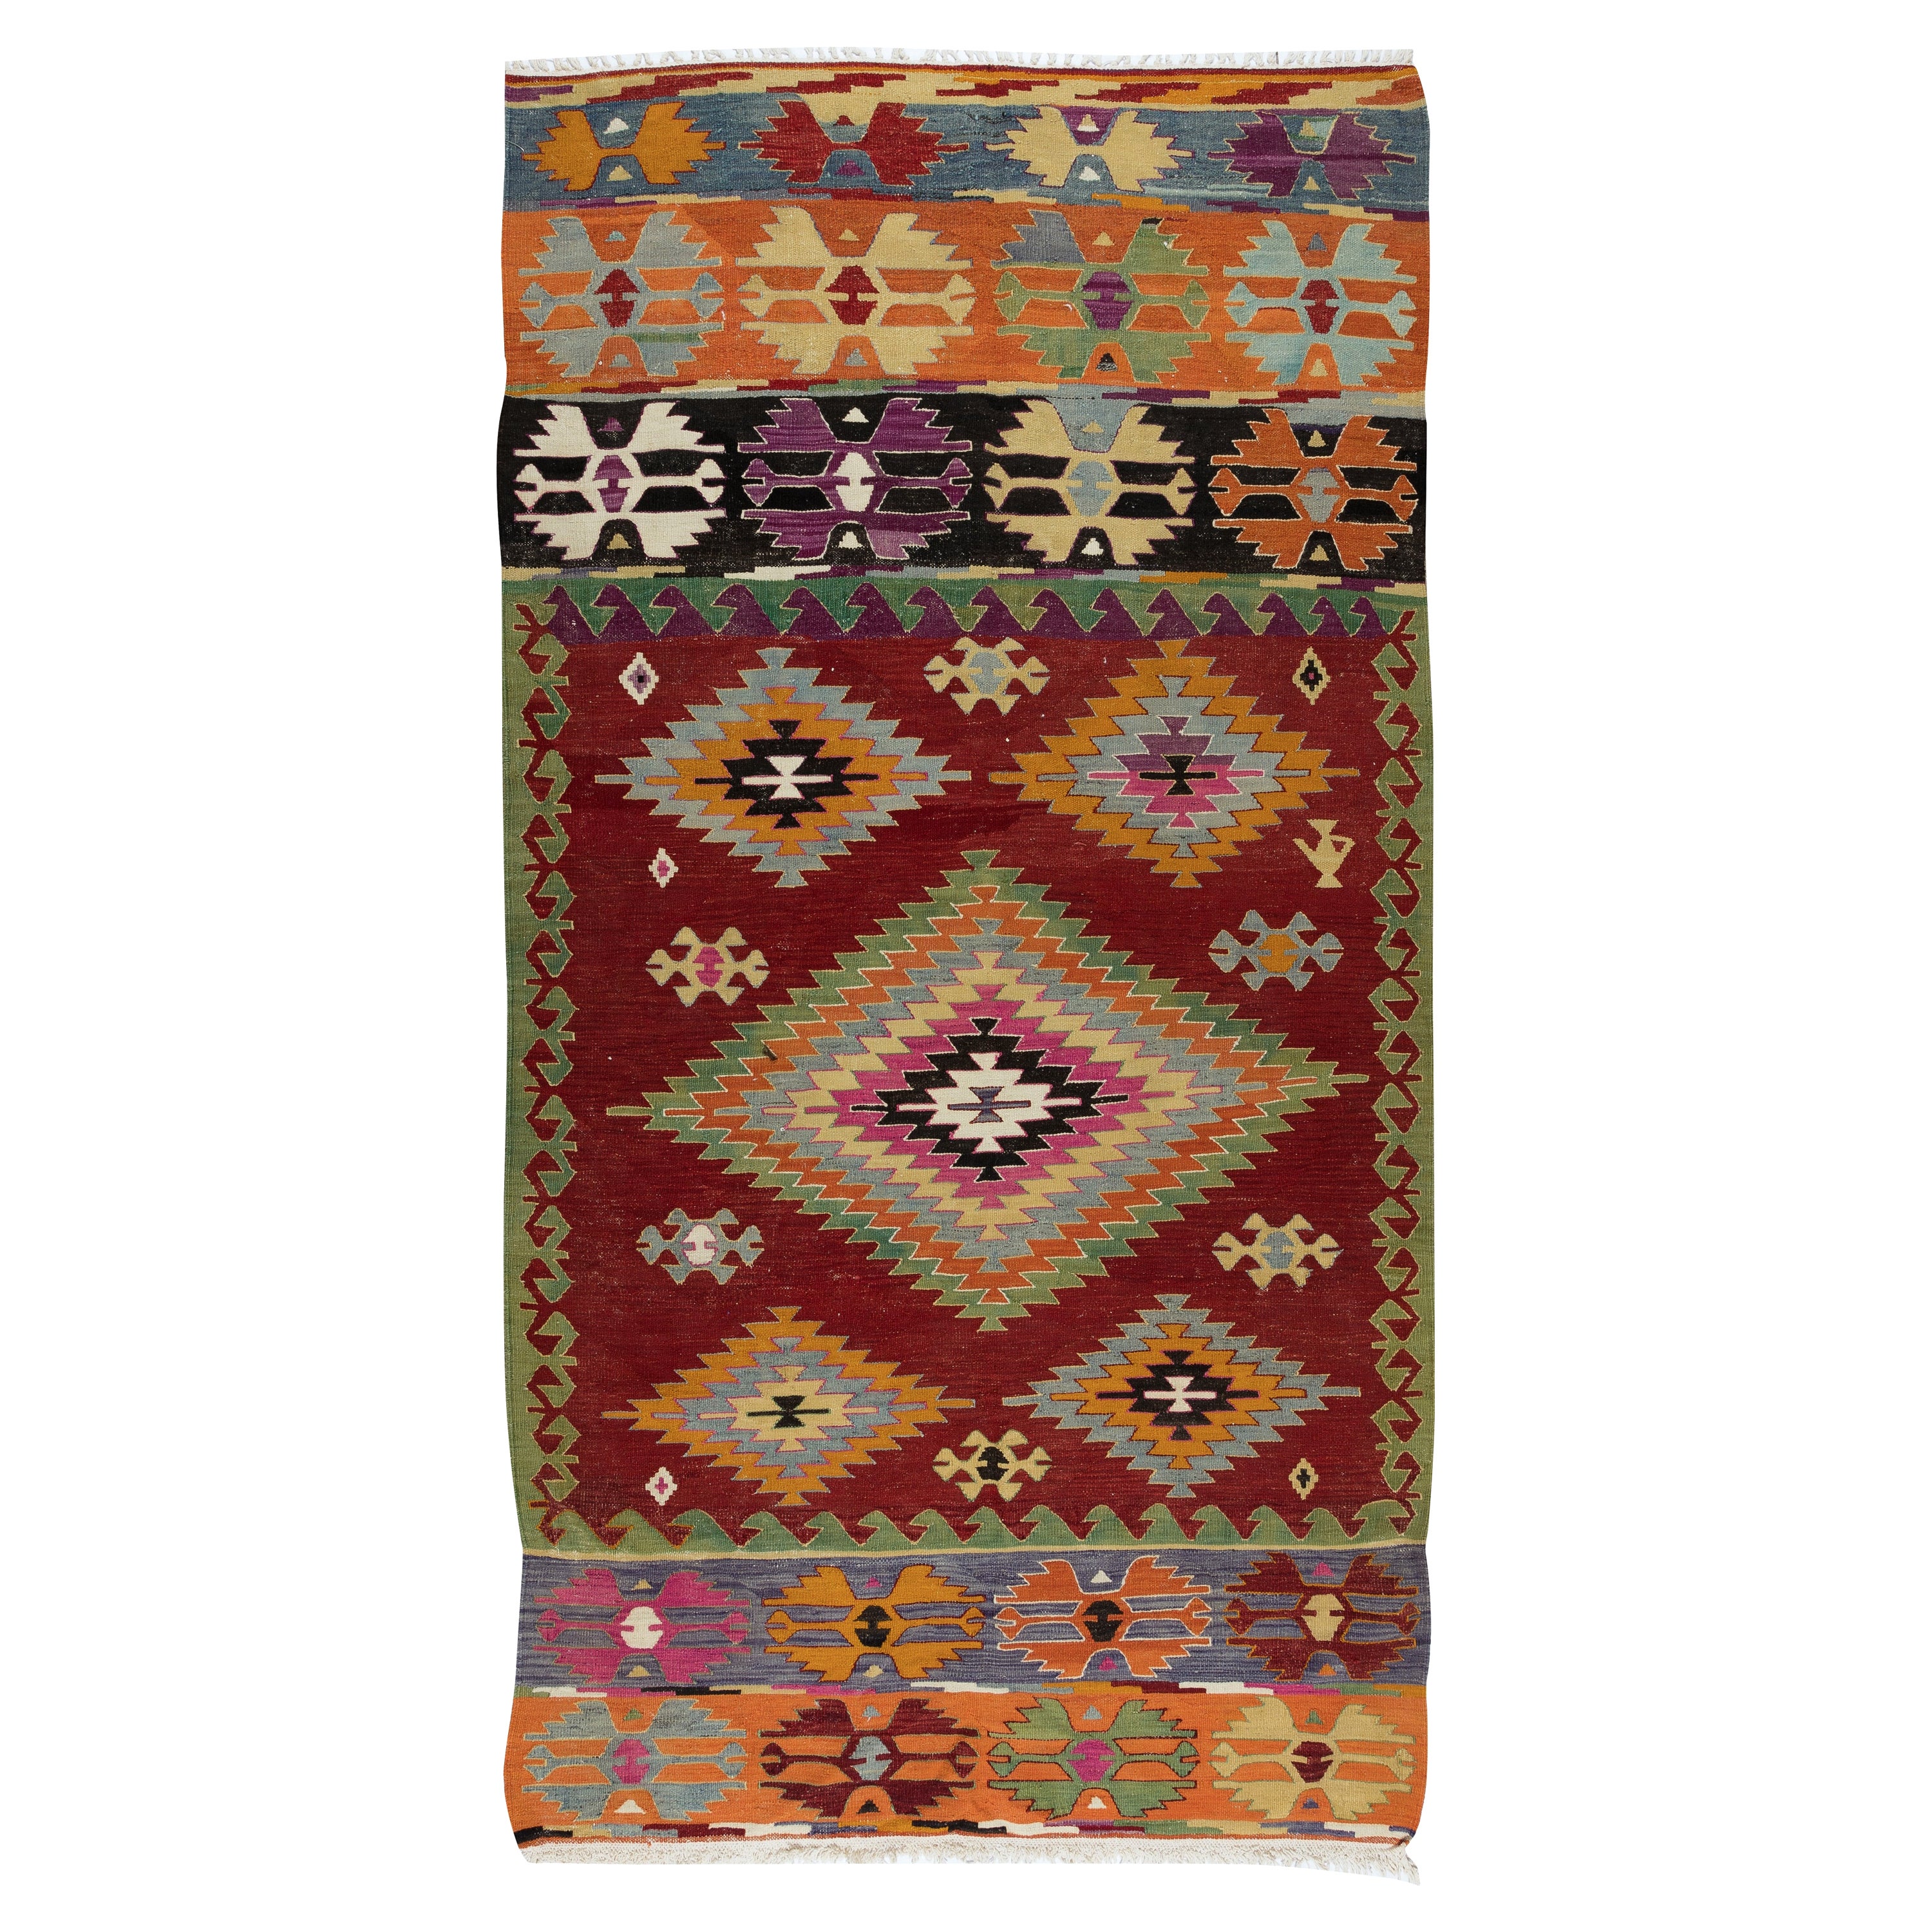 Rug & Kilim geometrico vintage dalla Turchia, 100% lana, colorato, 5x9,6 piedi, tessuto a mano